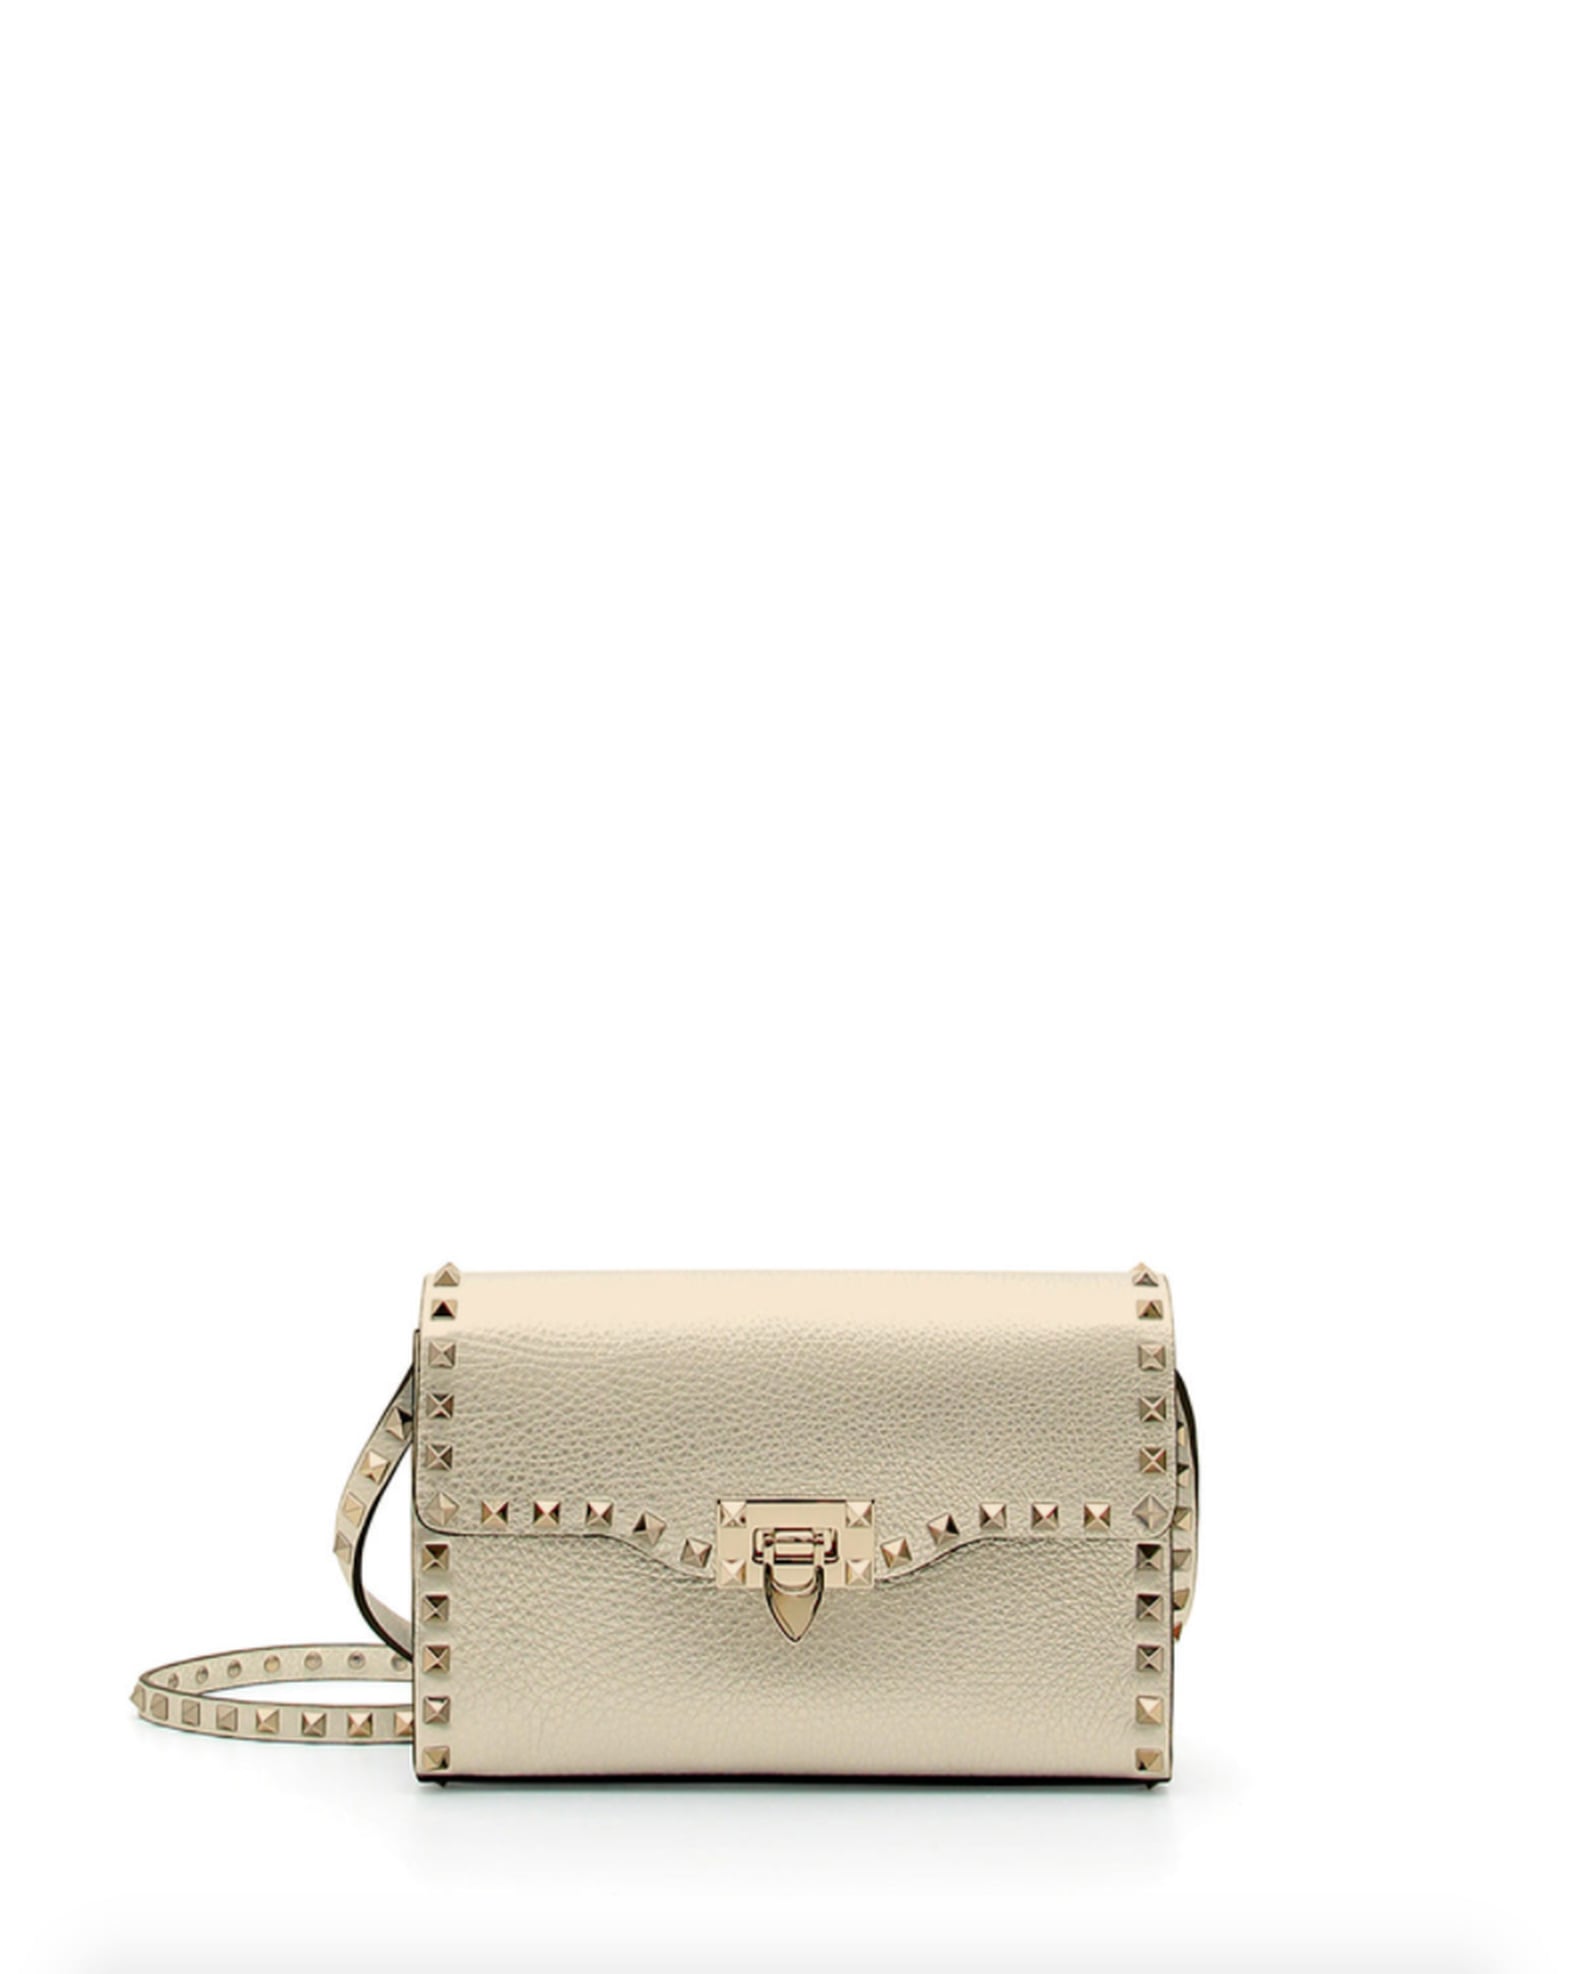 Queen Elizabeth's Gold Launer Handbag | POPSUGAR Fashion